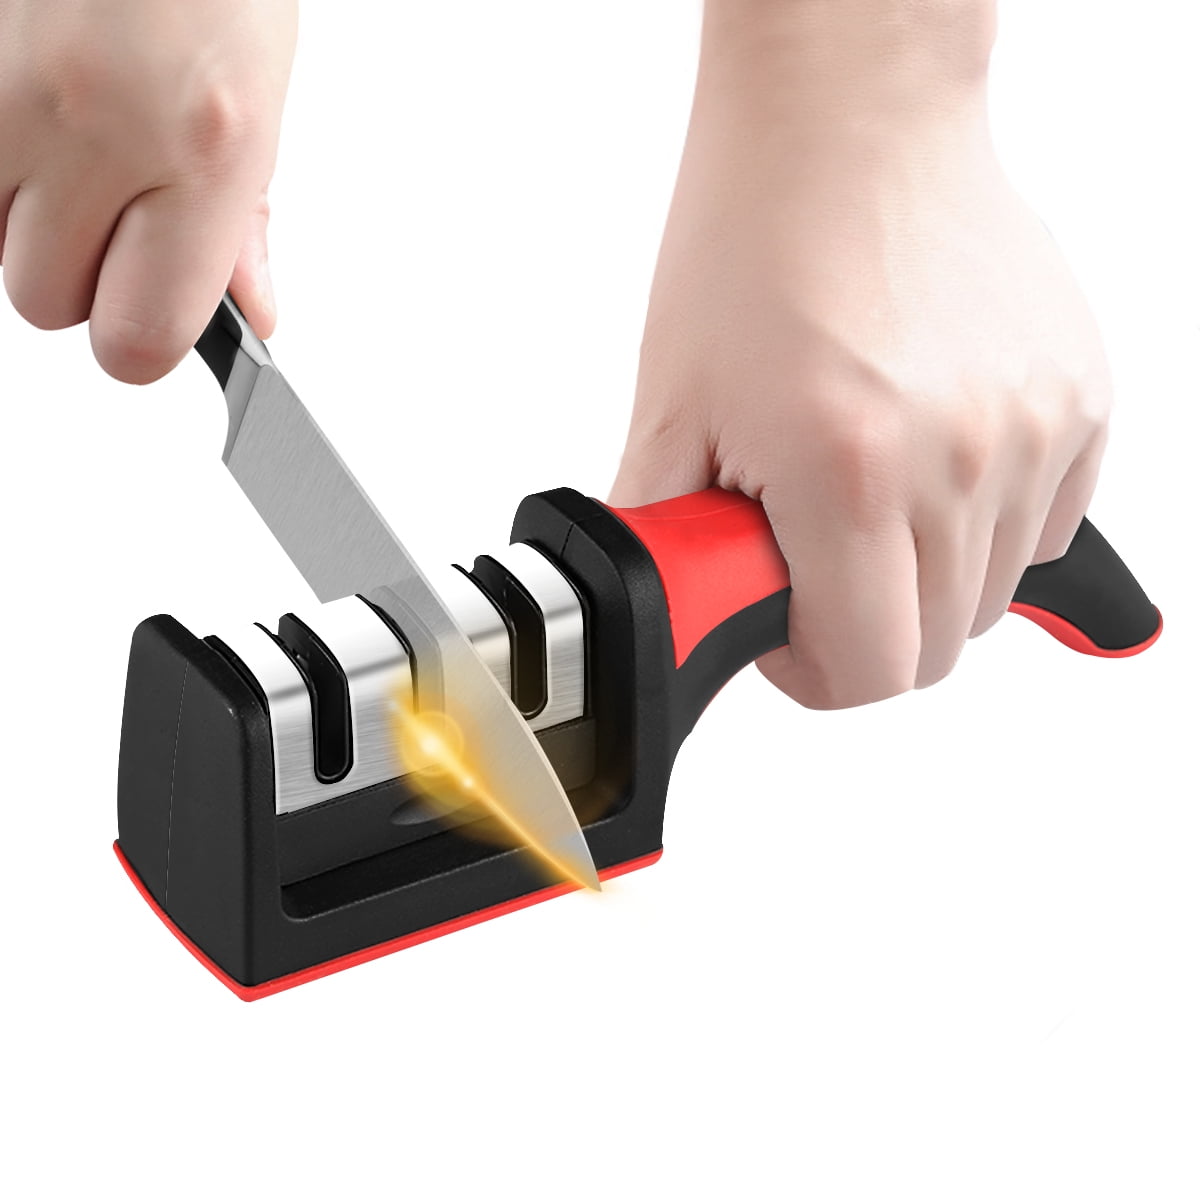 Tumbler Rolling Knife Sharpener Detachable Knife Sharpening Made